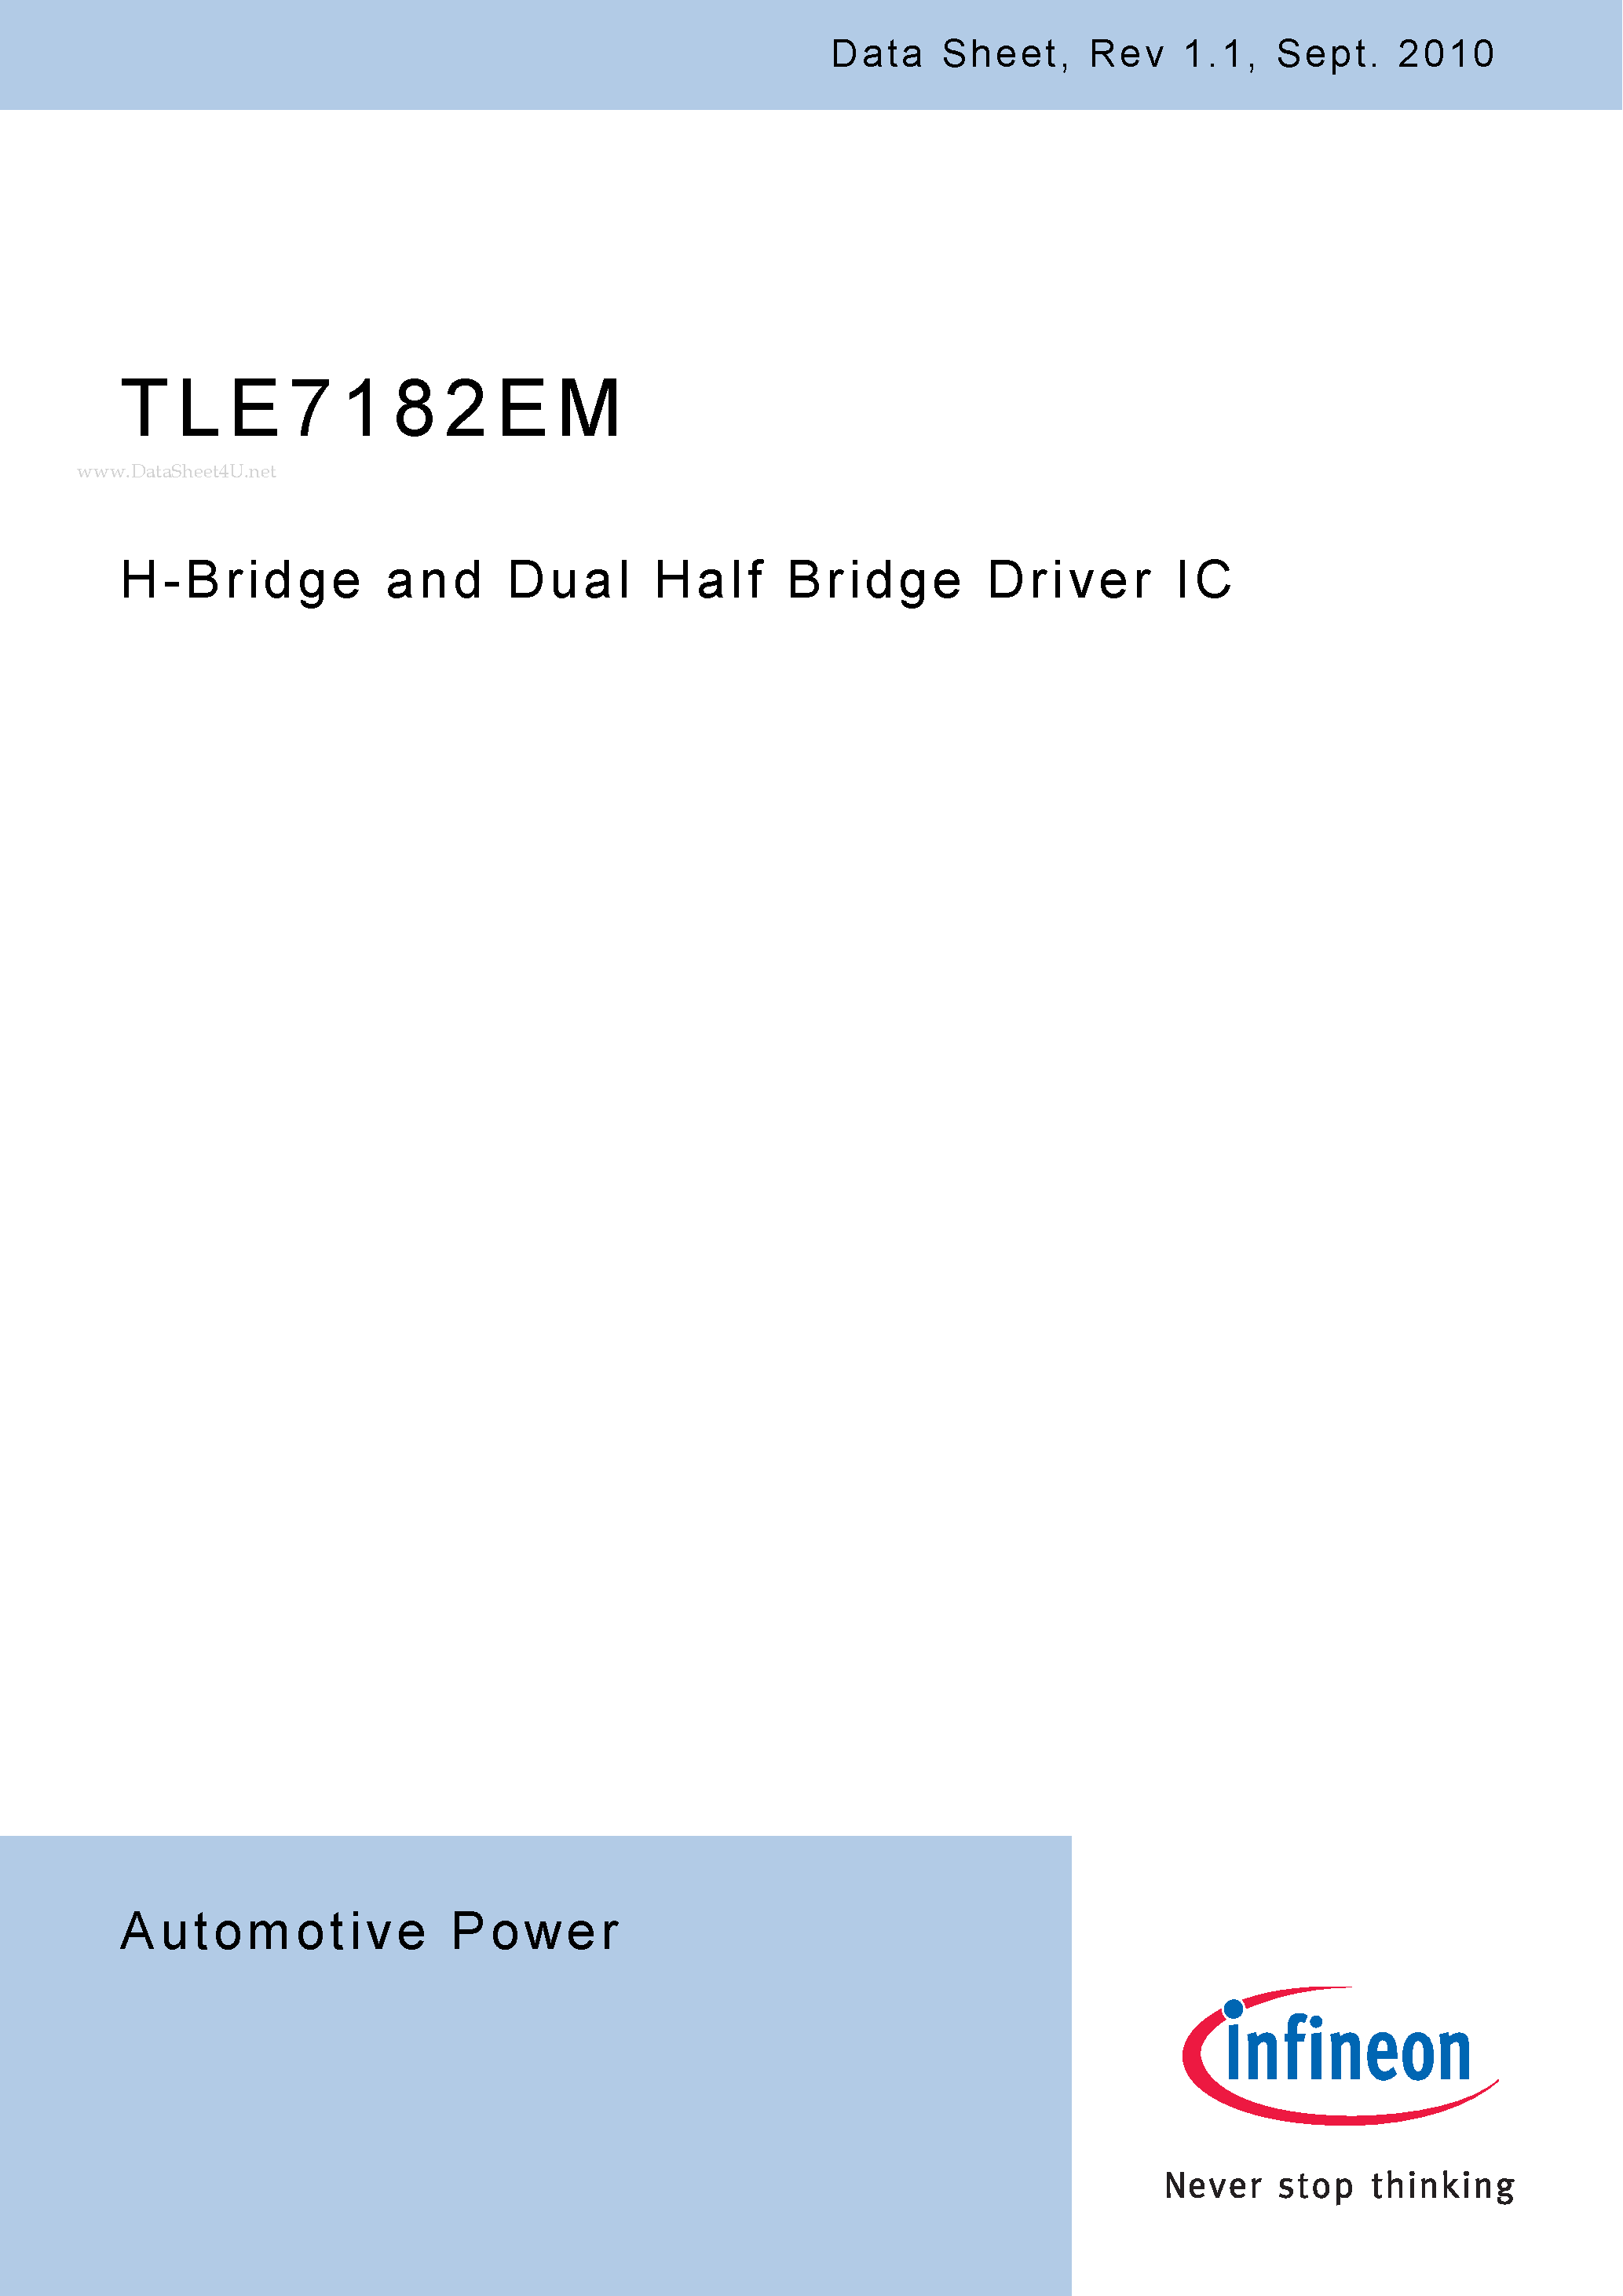 Datasheet TLE7182EM - H-Bridge and Dual Half Bridge Driver IC page 1